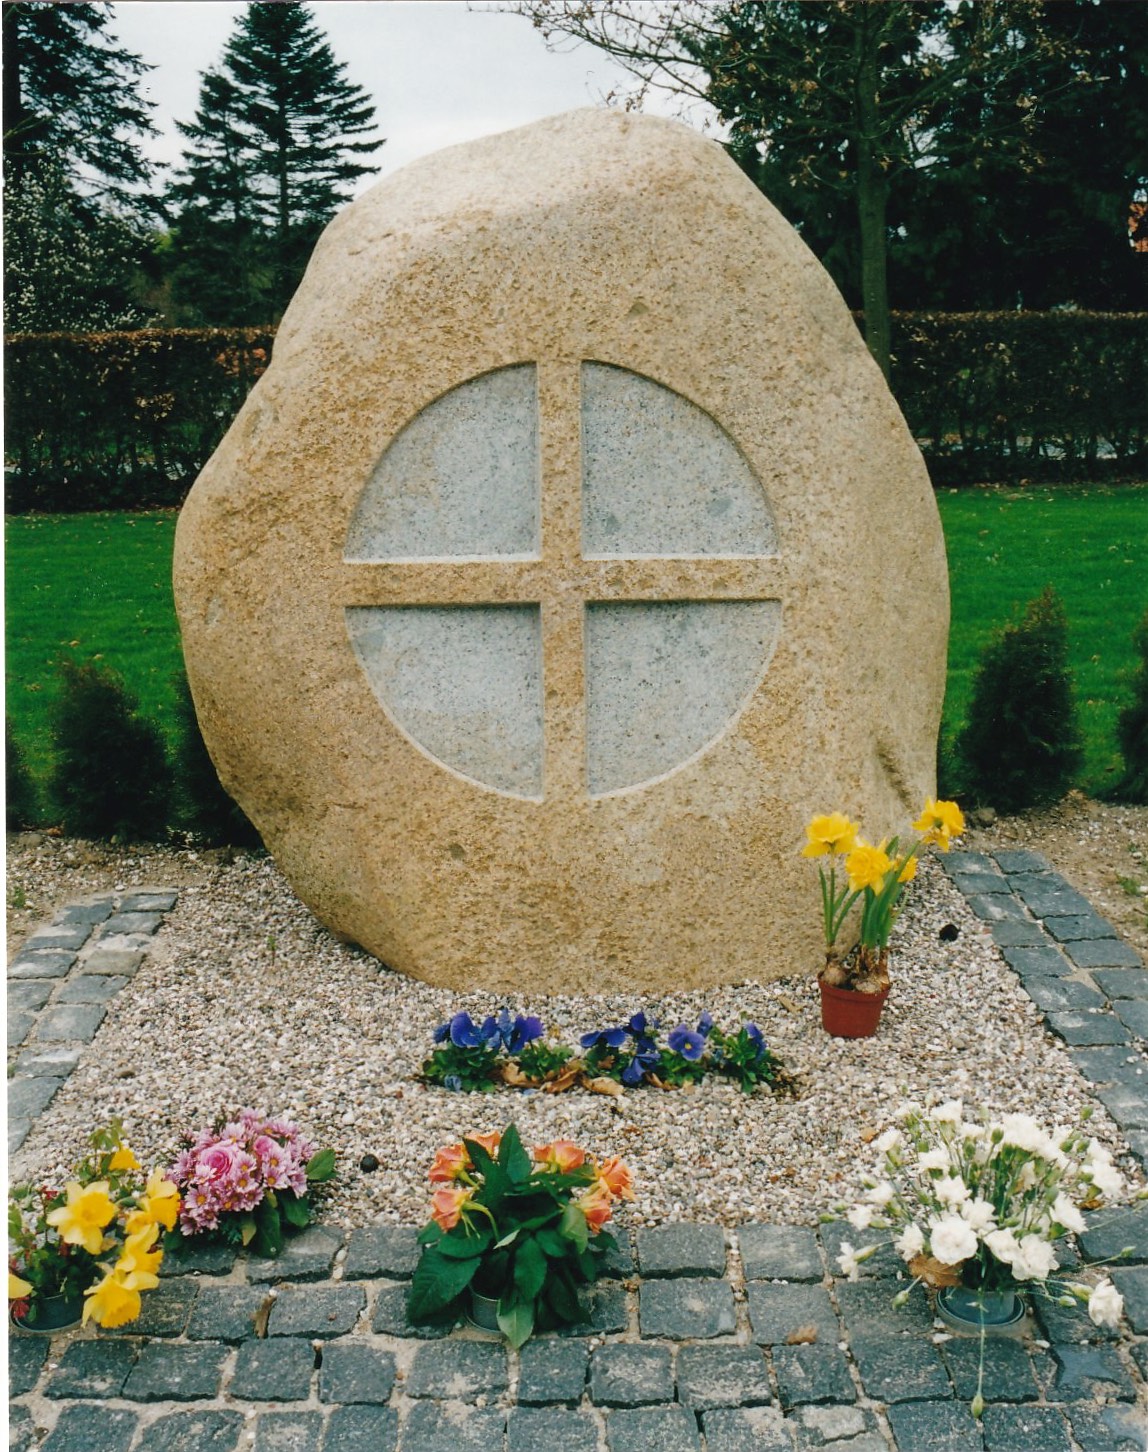 Kirkeudsmykning ved Glamsbjerg kirke, 2001